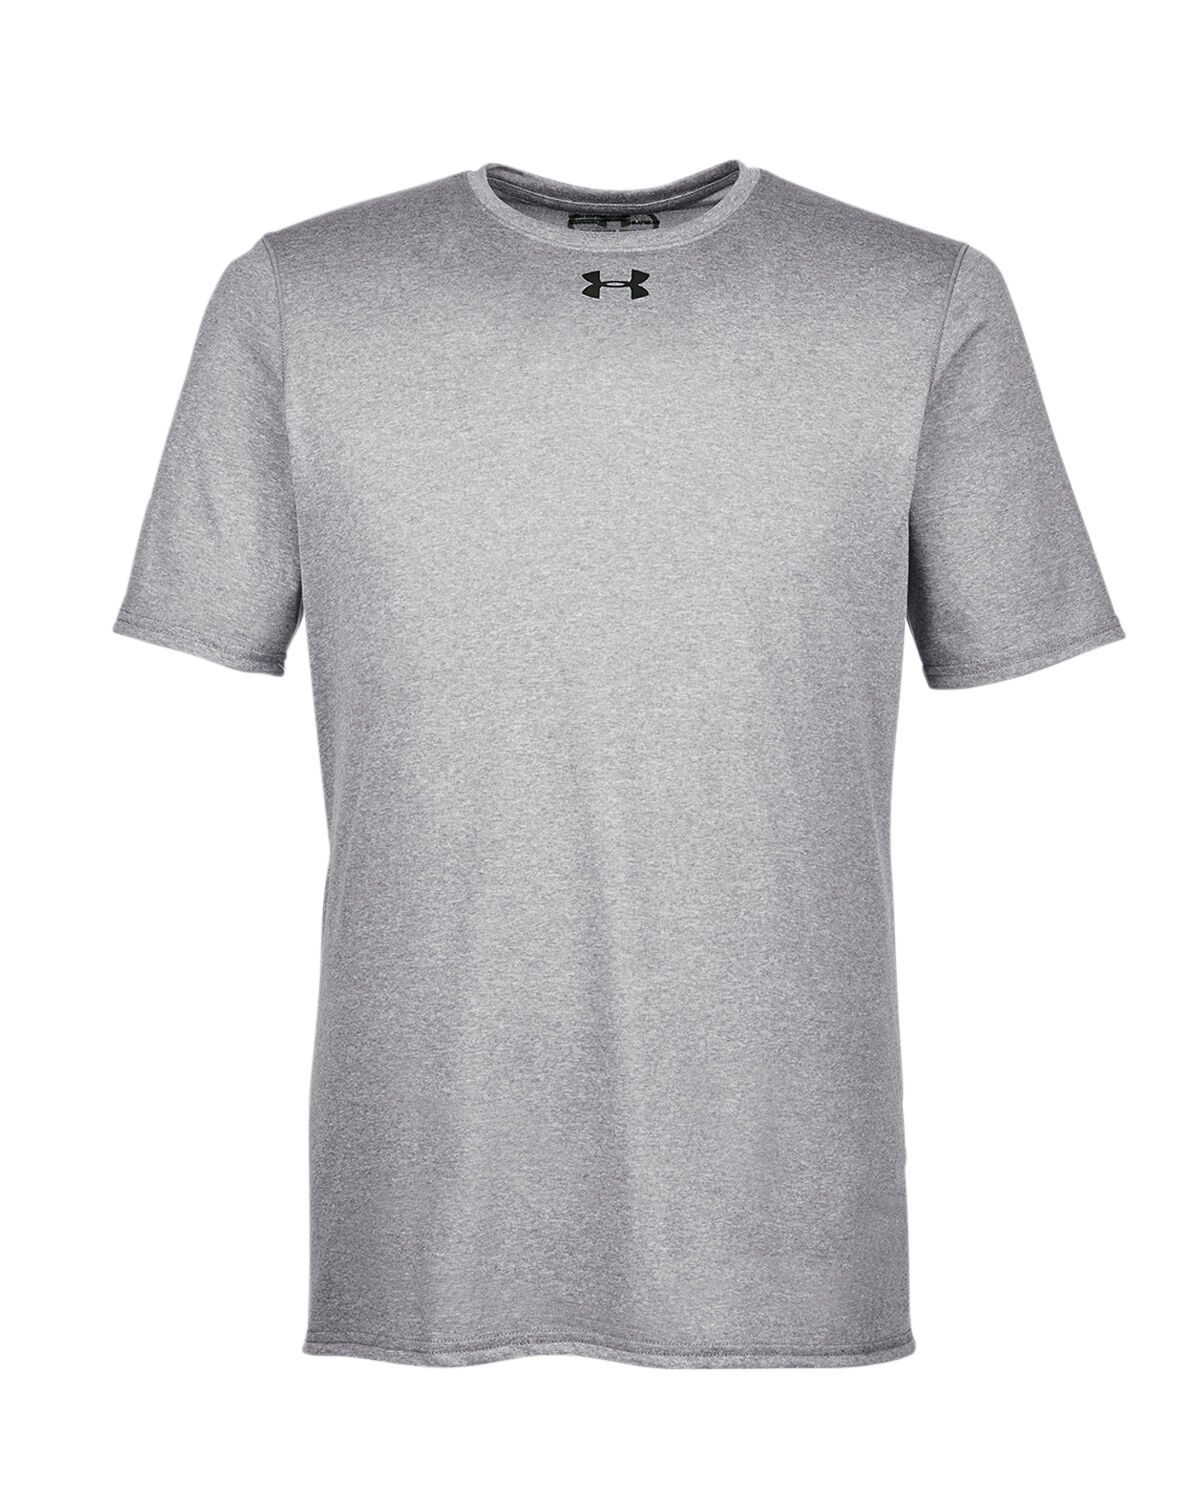 Branded Under Armour Men’s Locker T-Shirt 2.0 True Grey Heather/Black